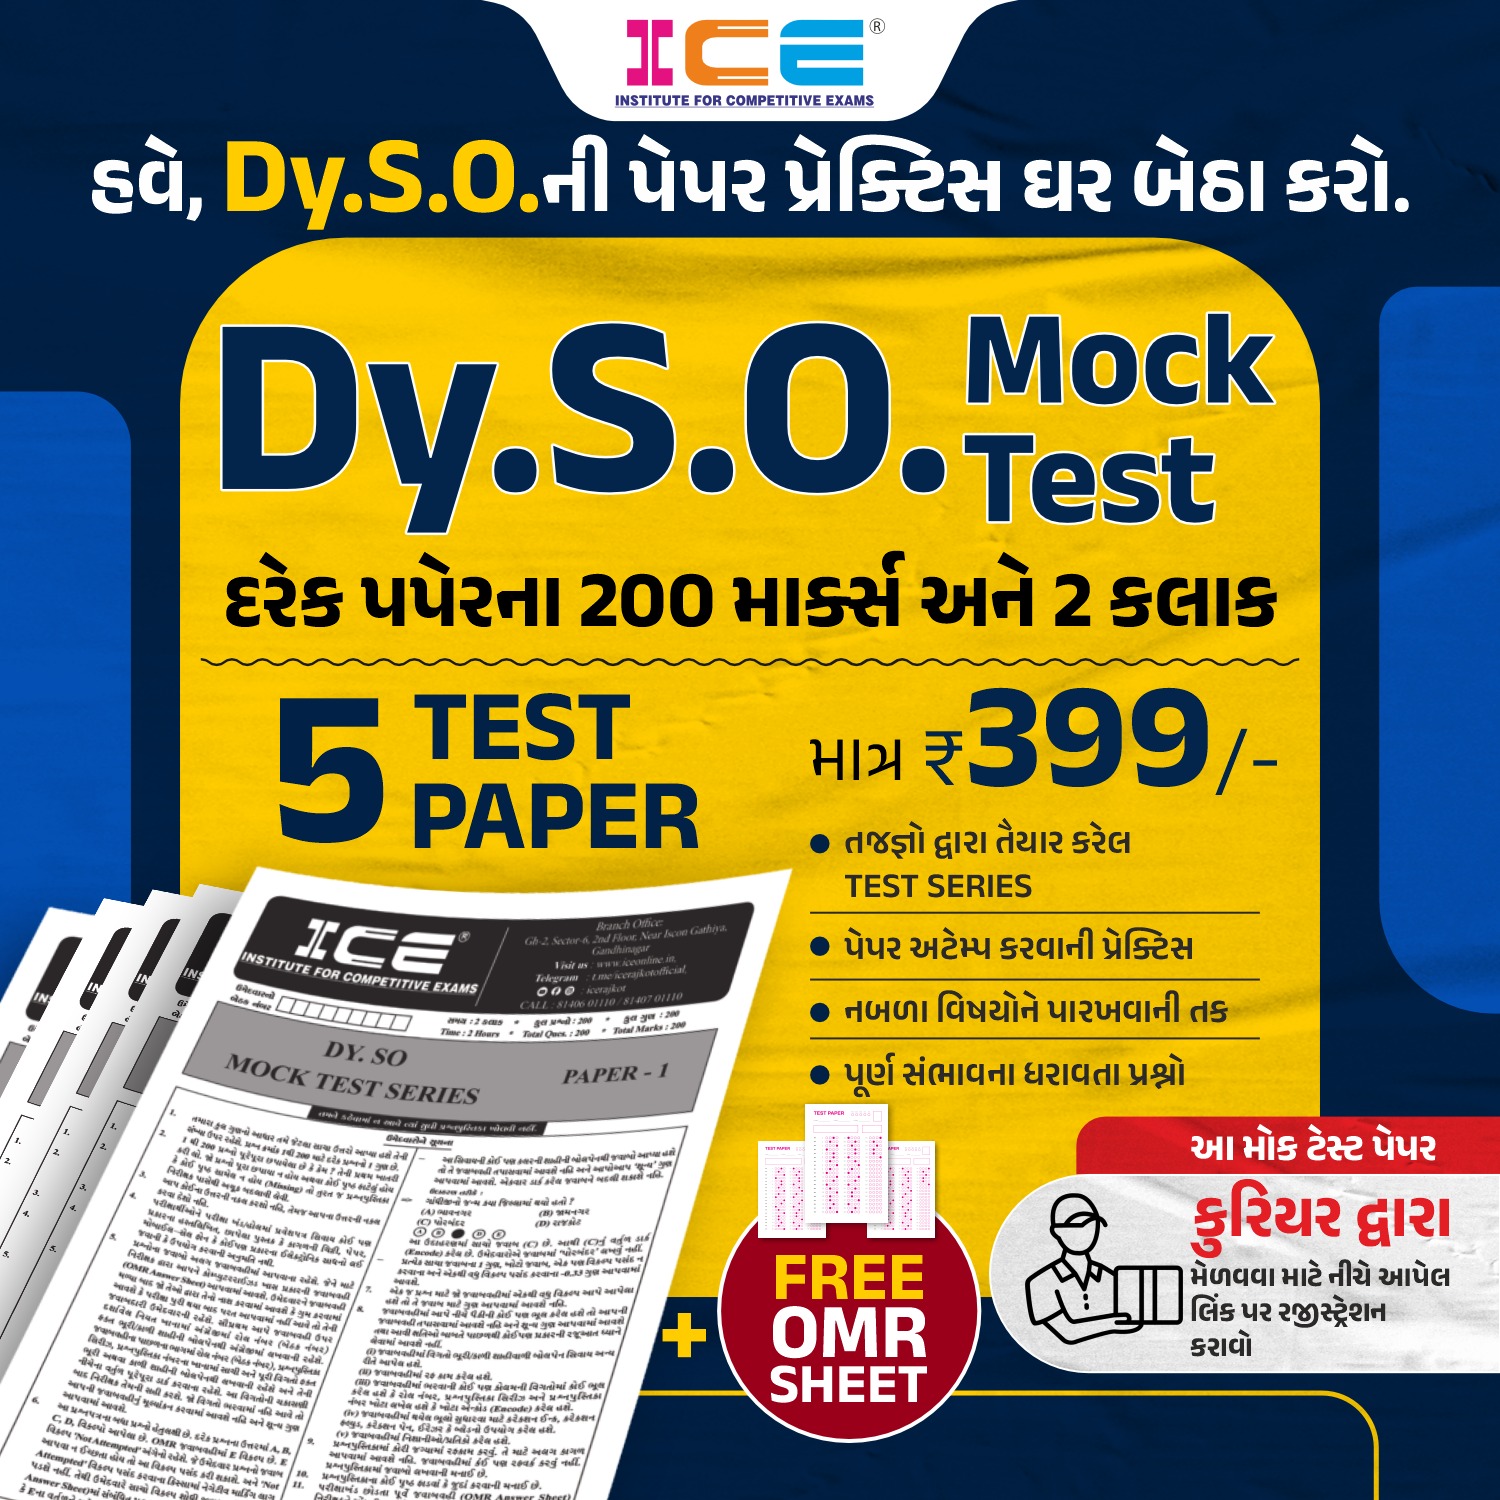 Dy.S.O. Mock Test + FREE OMR SHEET